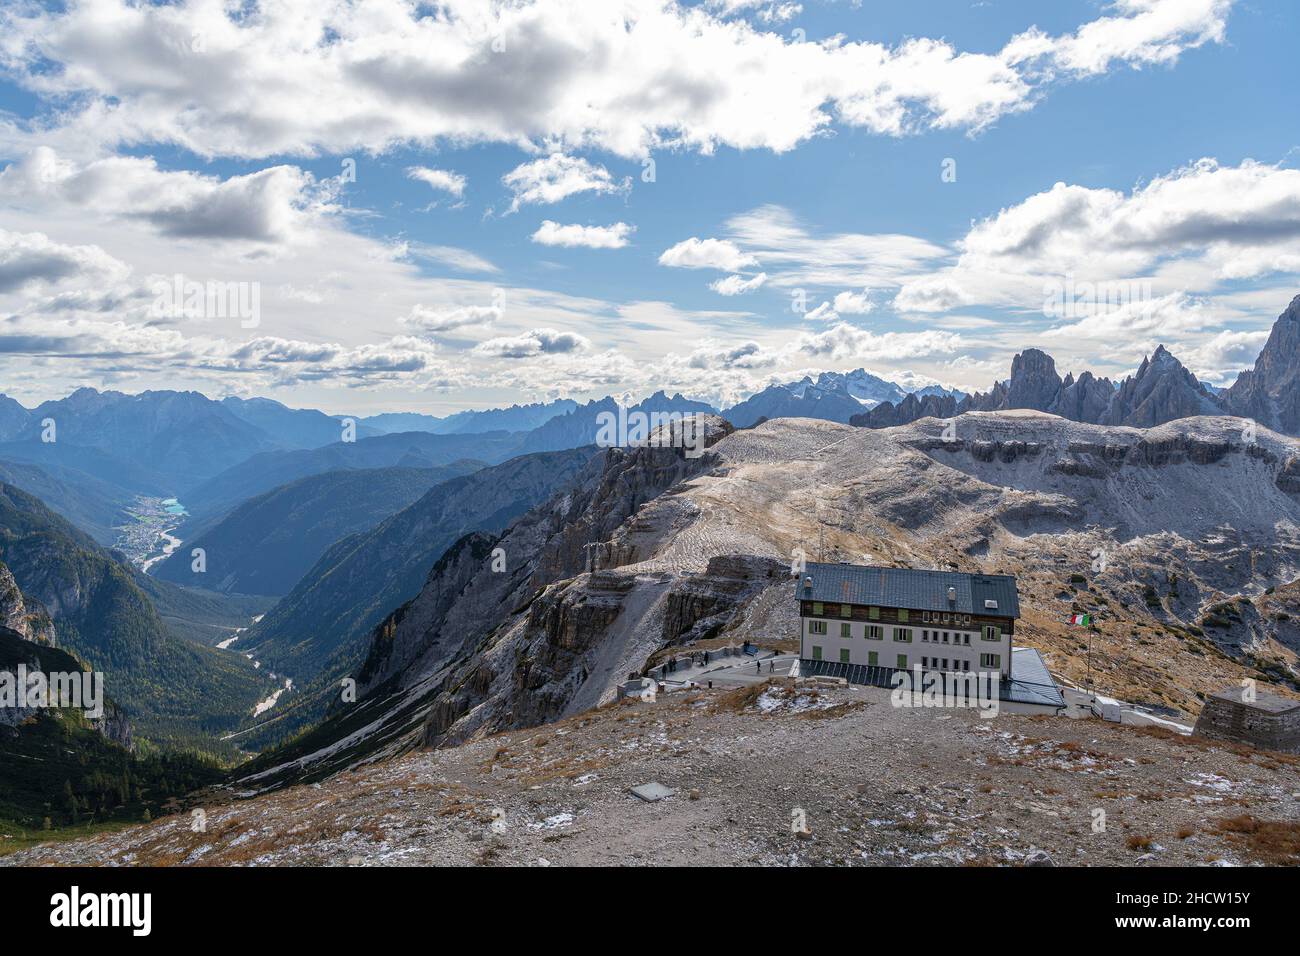 The house Rifugio Auronzo near the mountains Tre Cime di Lavaredo, Italy Stock Photo